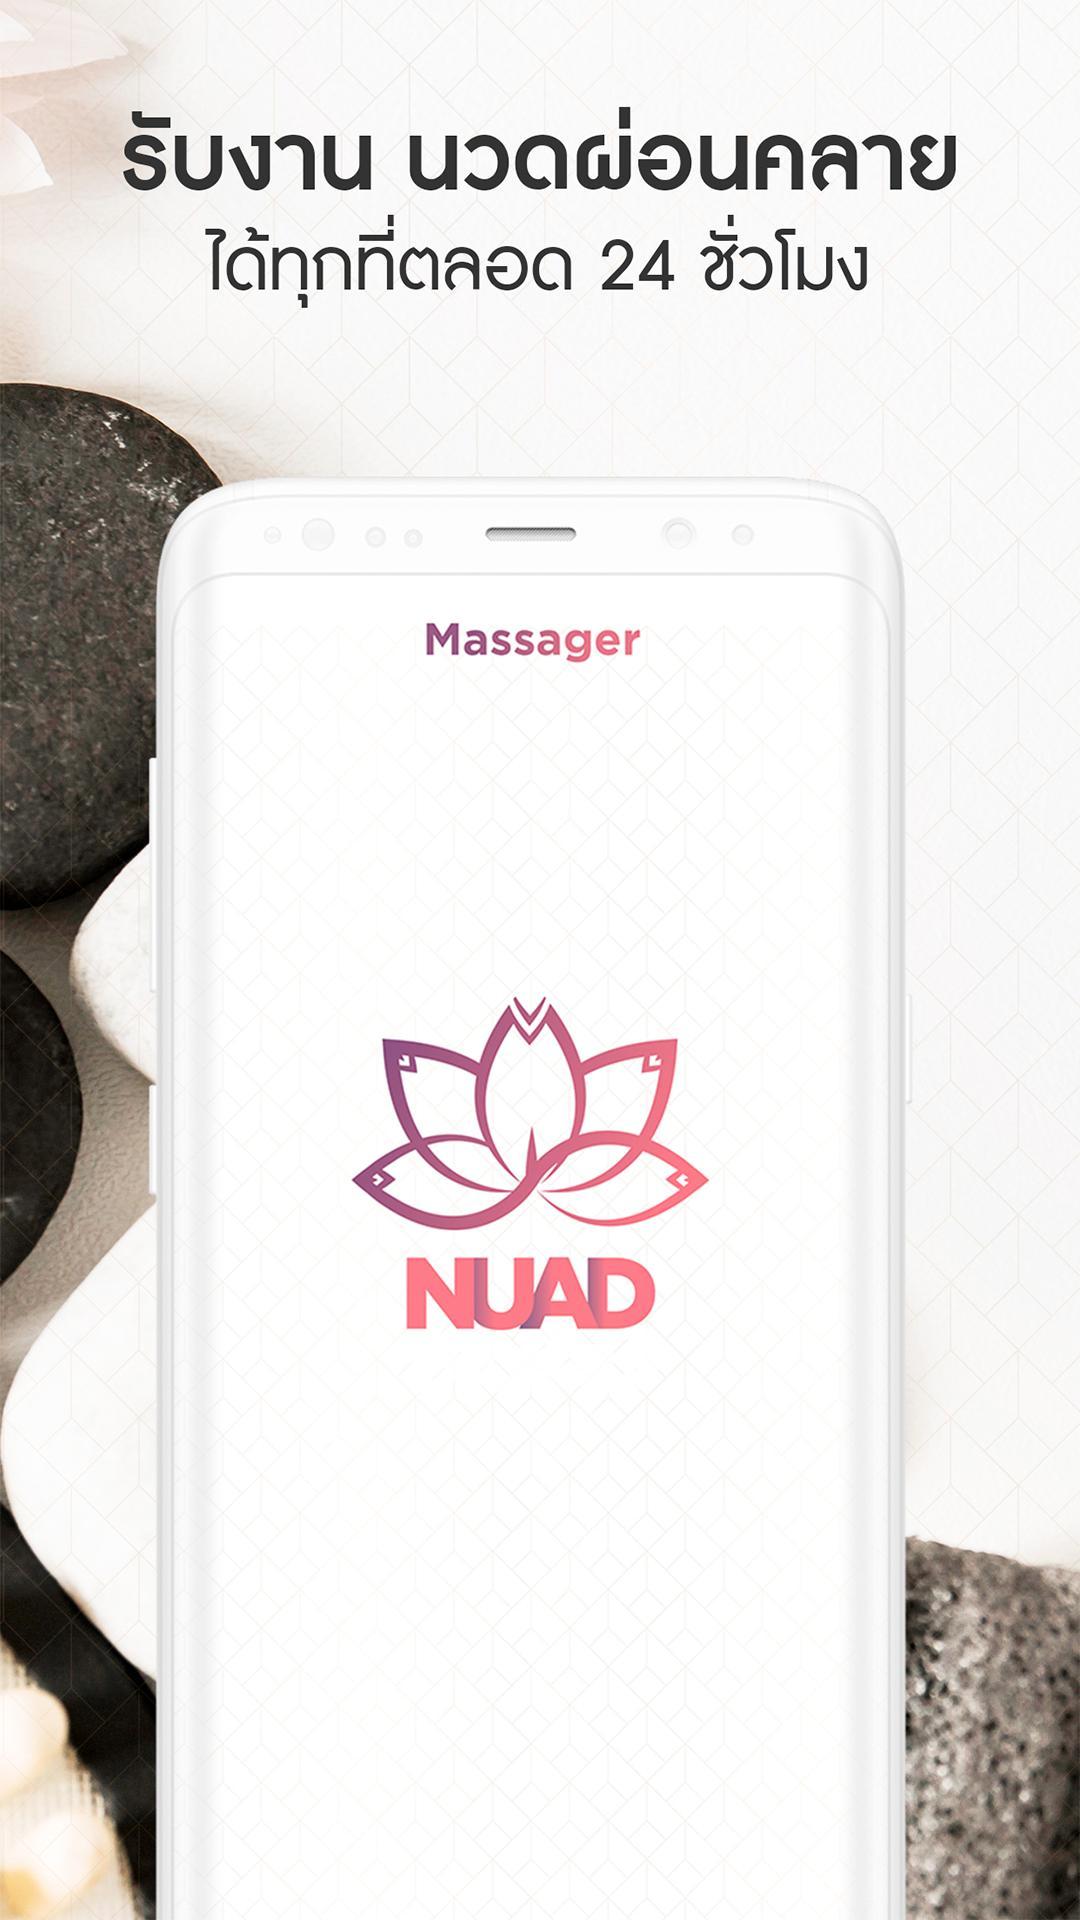 MOR NUAD - For Massager for Android - APK Download